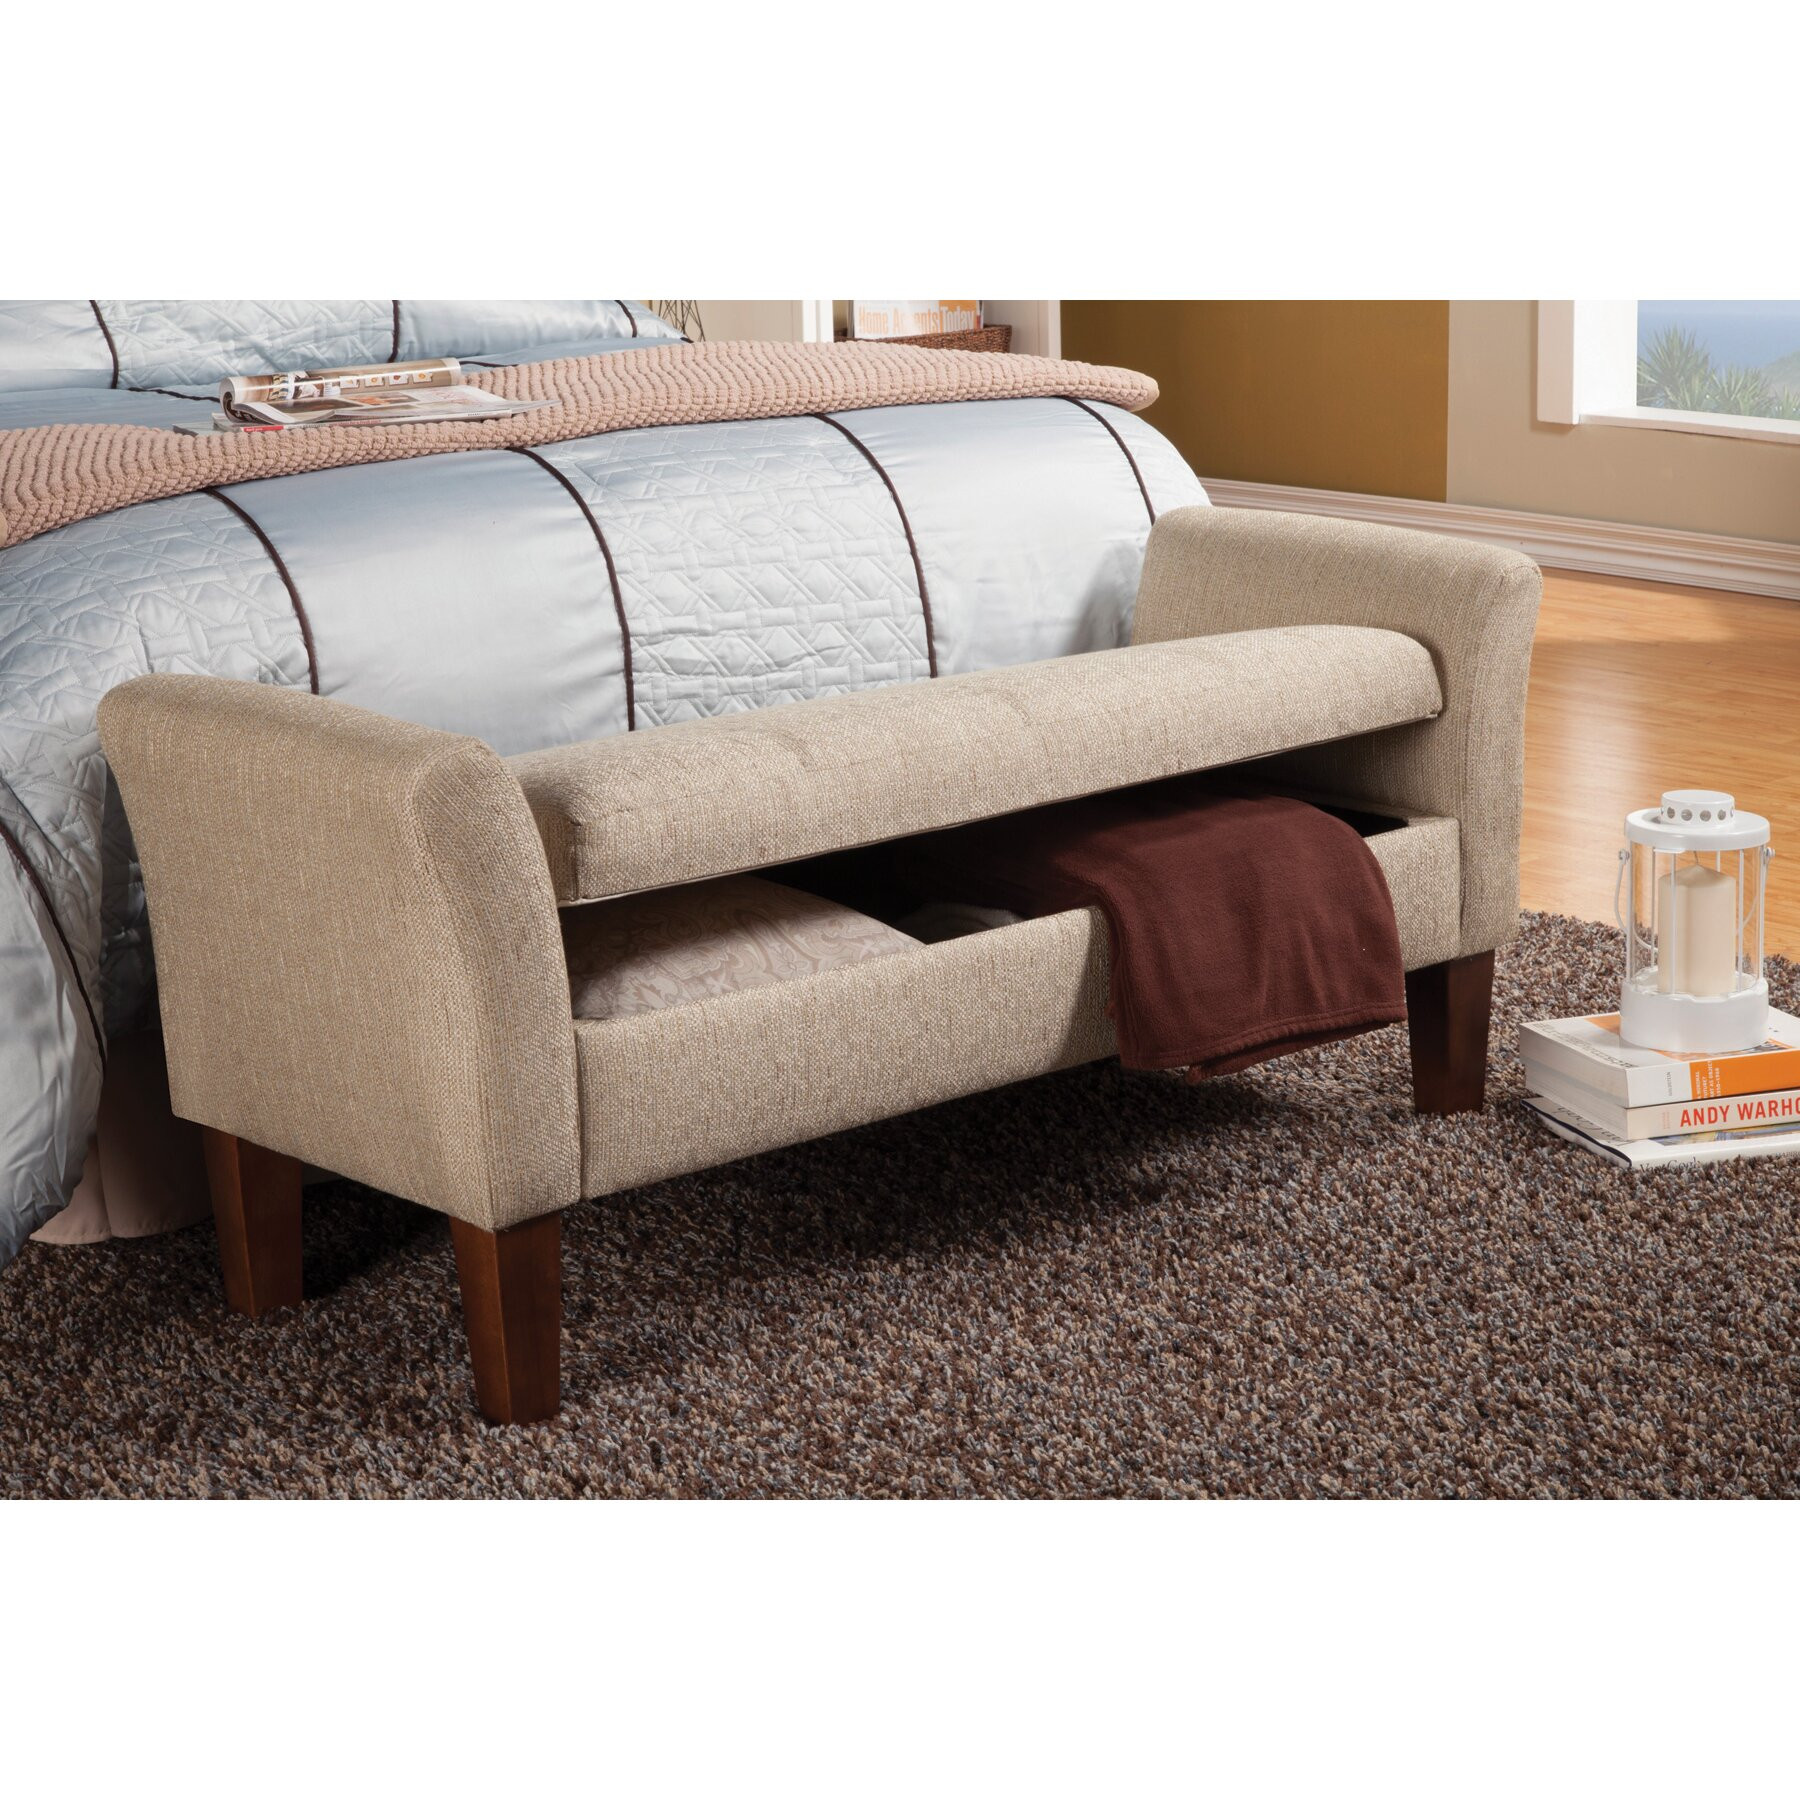 Storage Bedroom Bench
 Wildon Home Upholstered Storage Bedroom Bench & Reviews